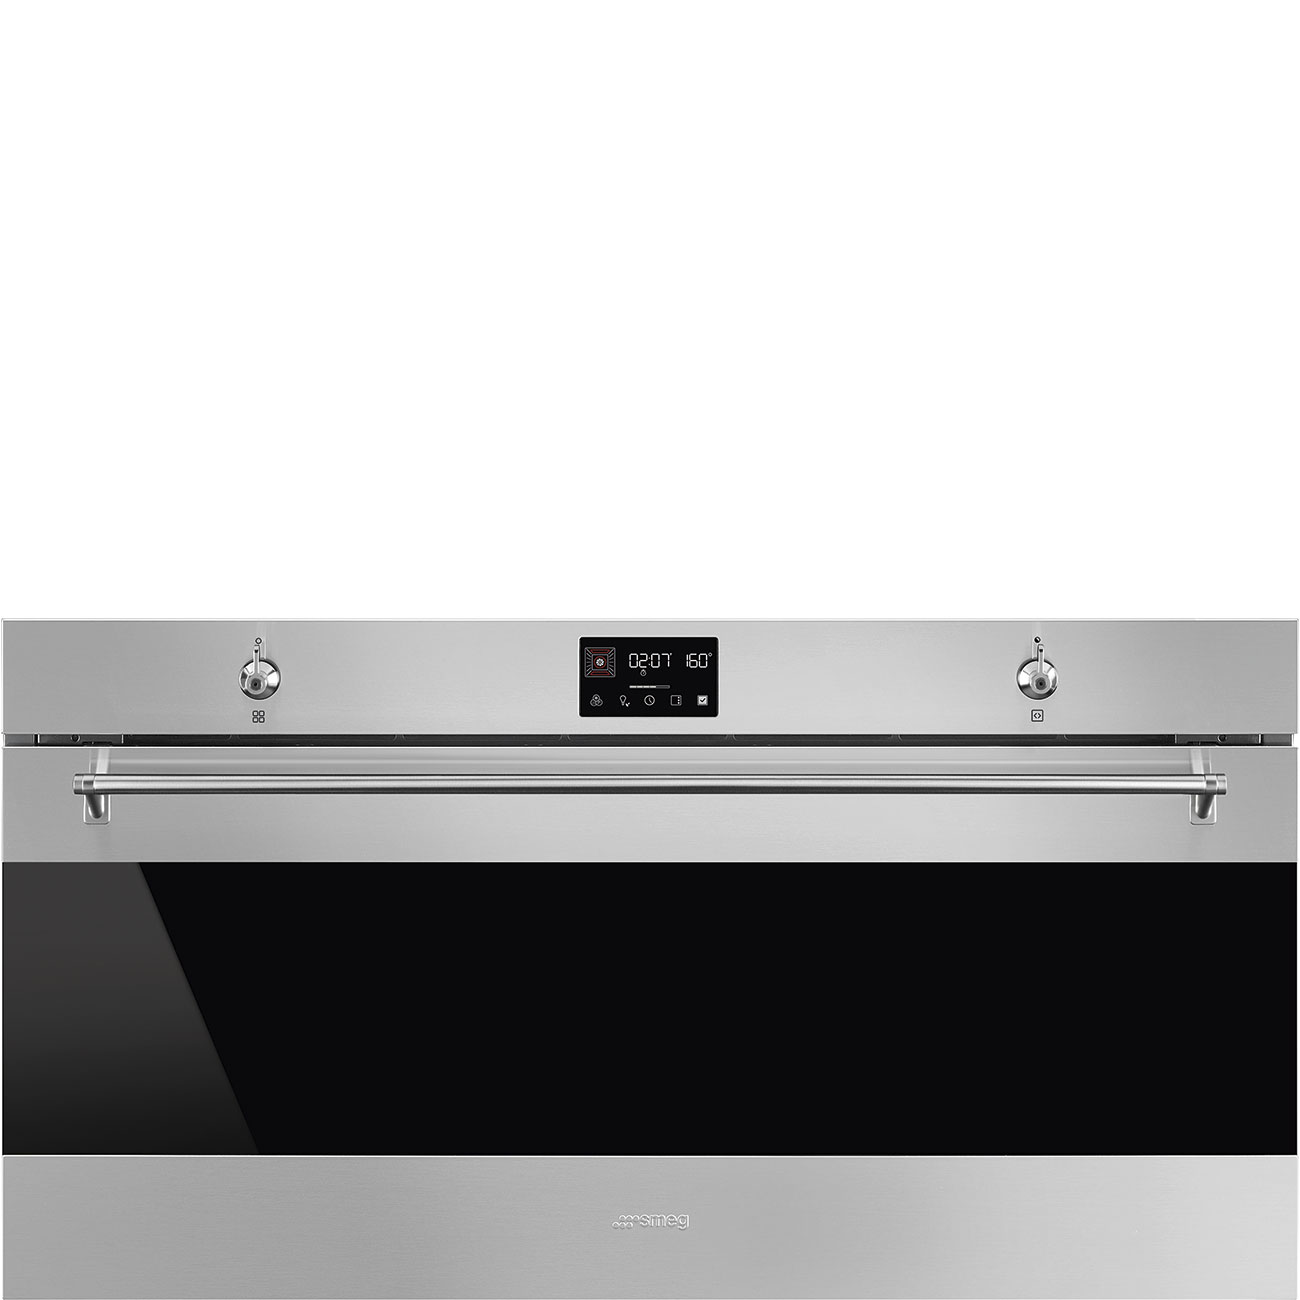 Multifunctionele oven Oven Verlaagd model 90x48 cm Smeg_1